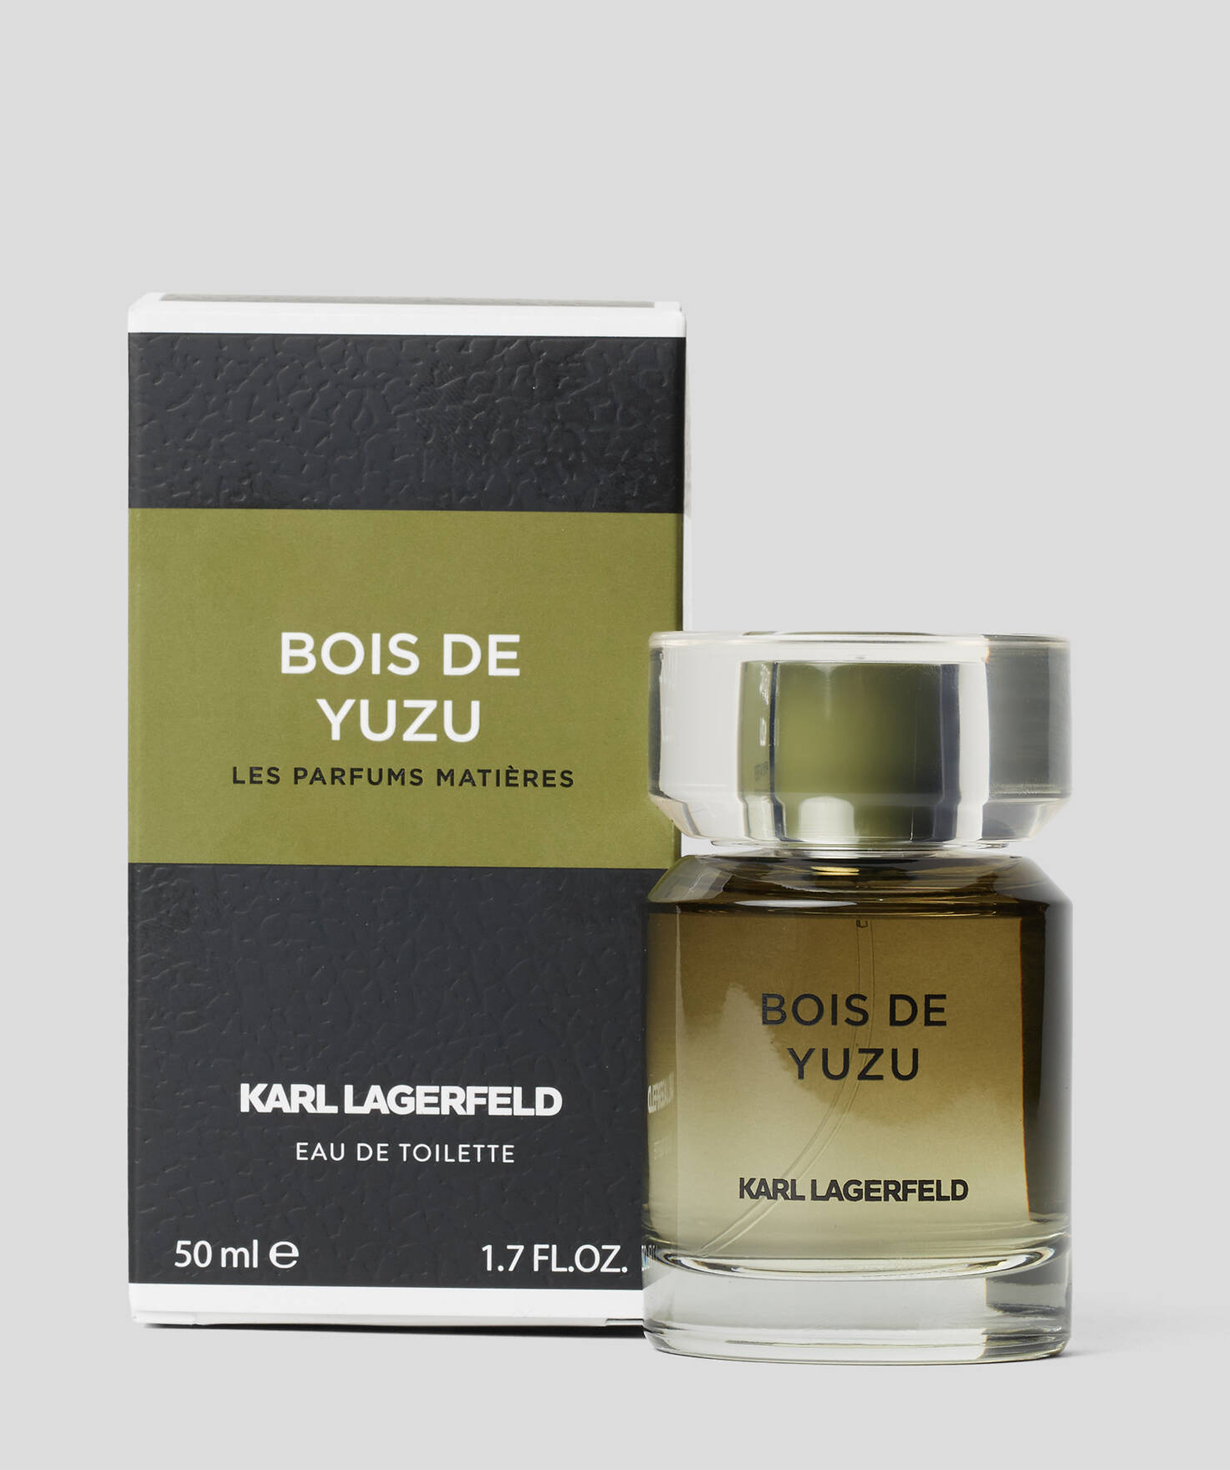 Perfume «Karl Lagerfeld» Bois de Yuzu, for men, 50 ml